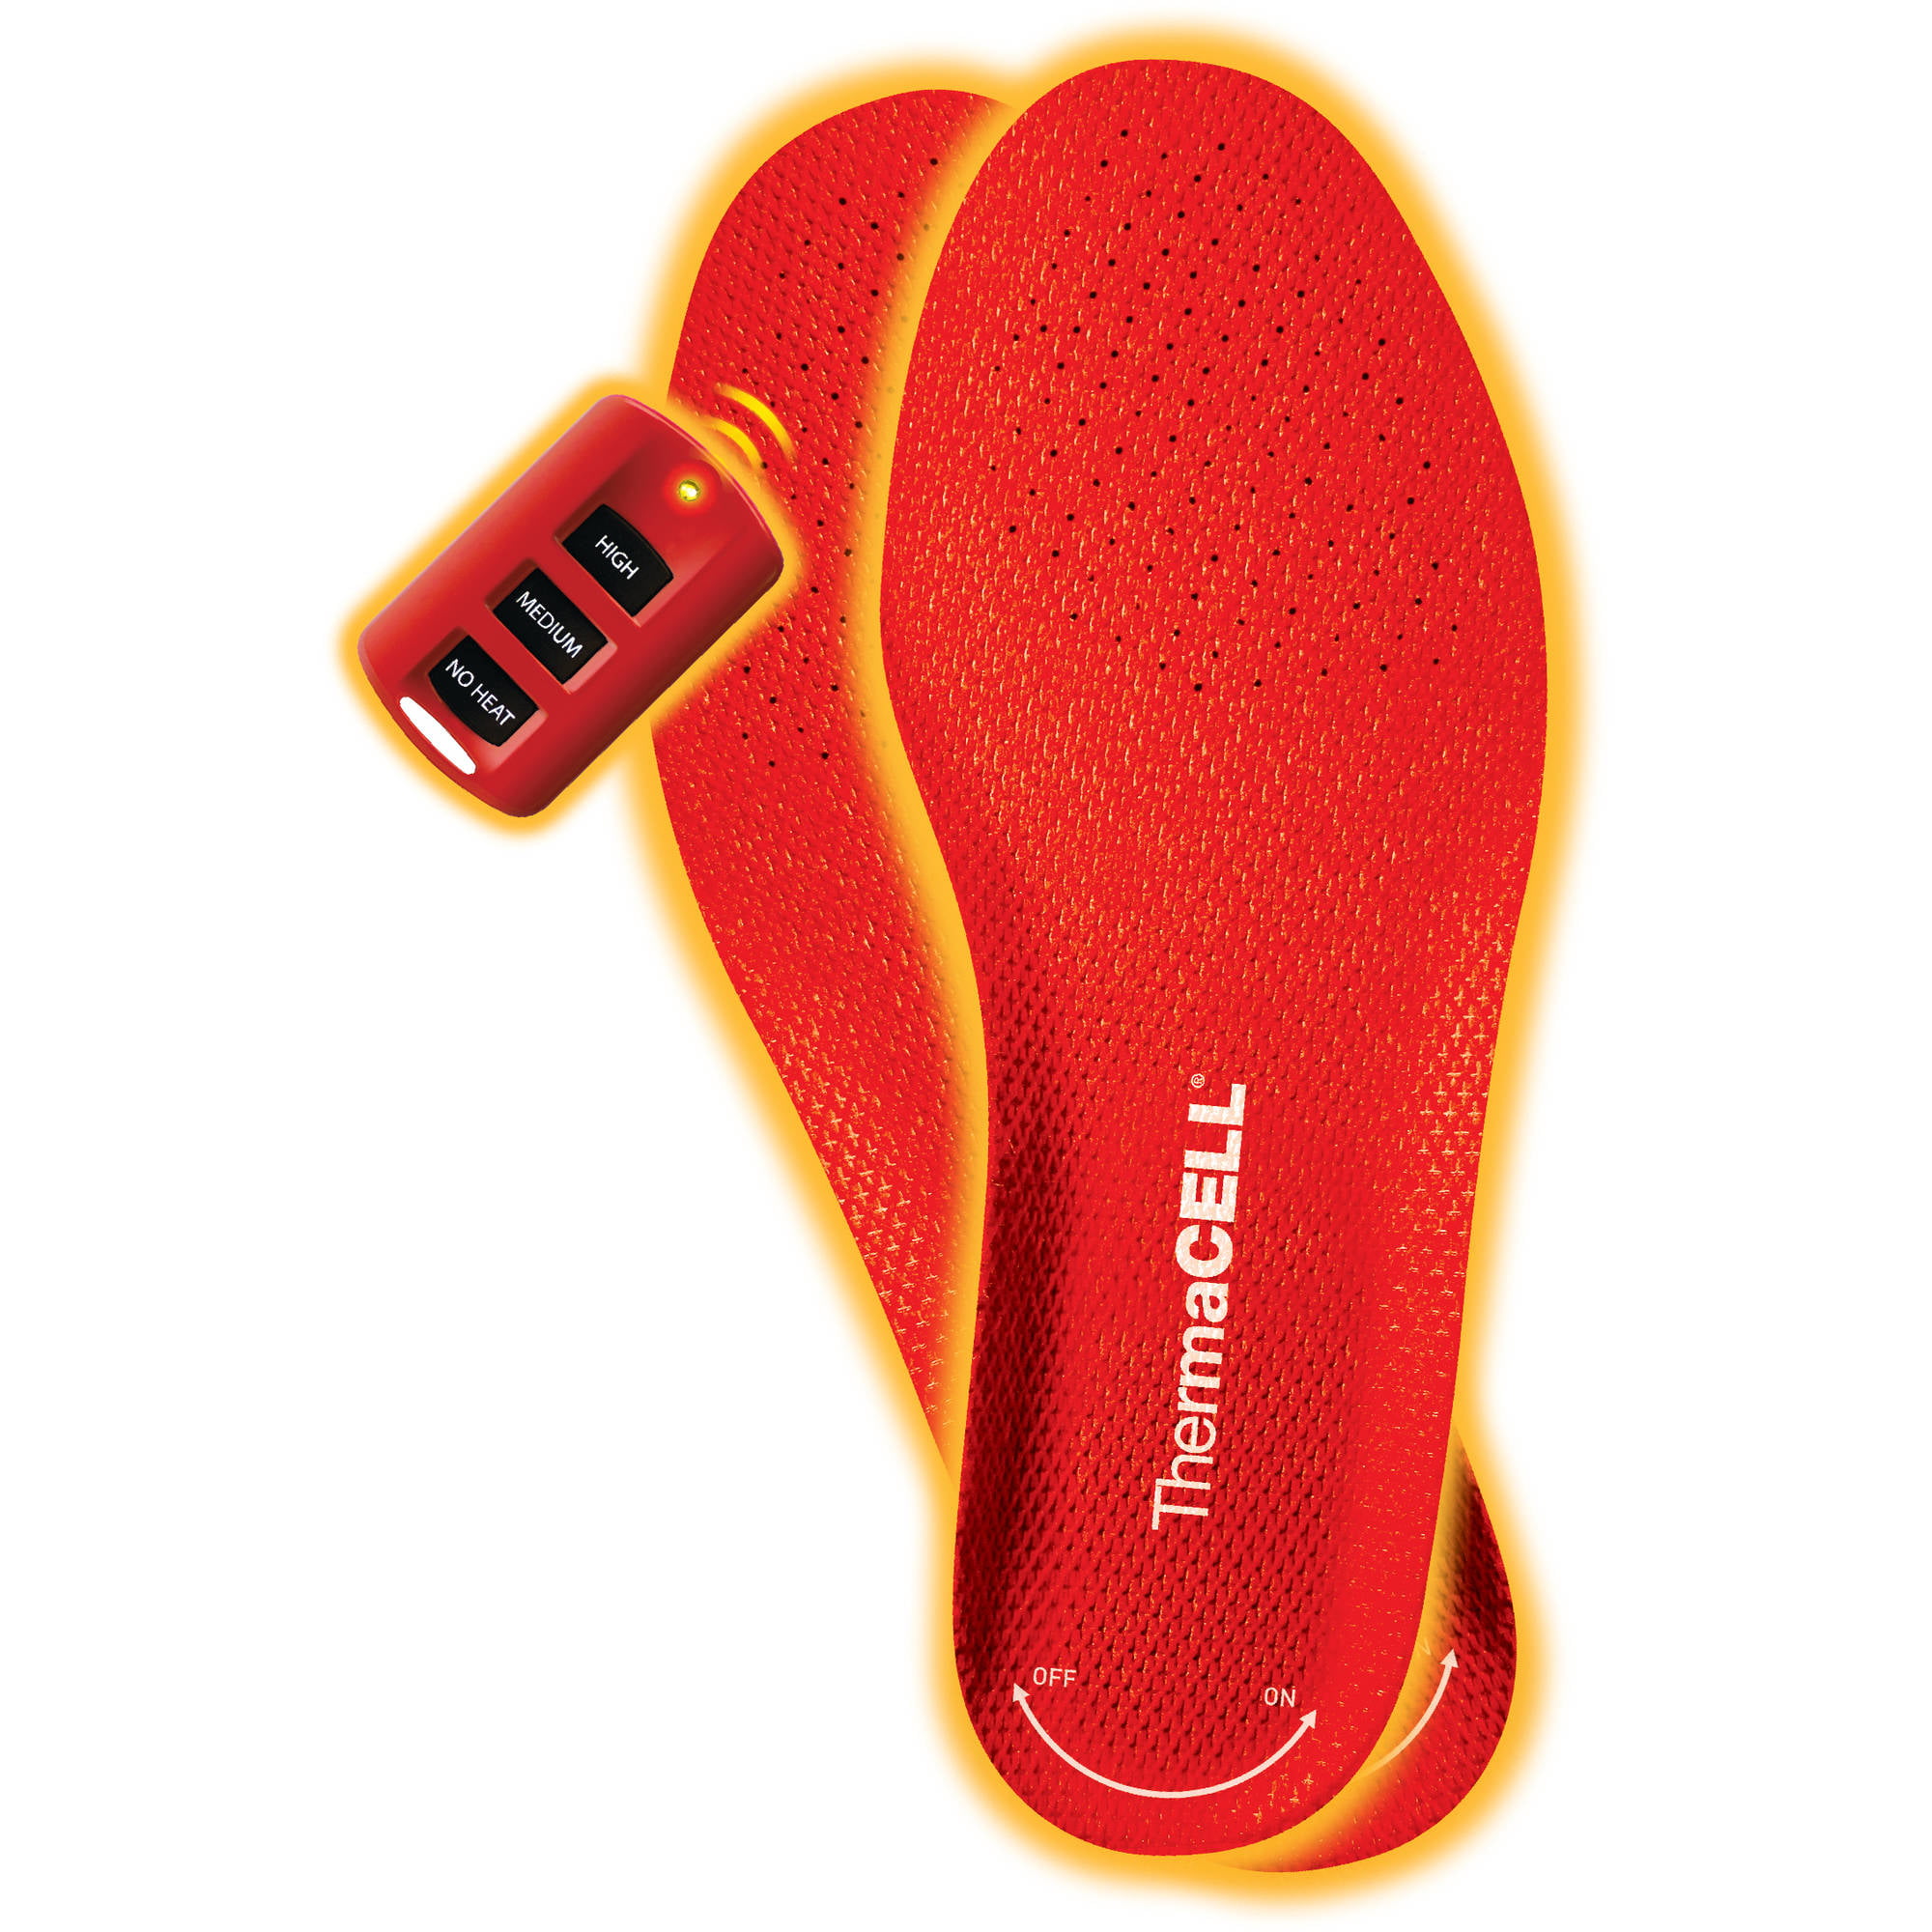 NCBH Heated Foot Warmer Men Women Outdoor Shock Absorption Charging Intelligent Heating Warm EVA Warm Foot Insoles Breathable,3 Speed Keep